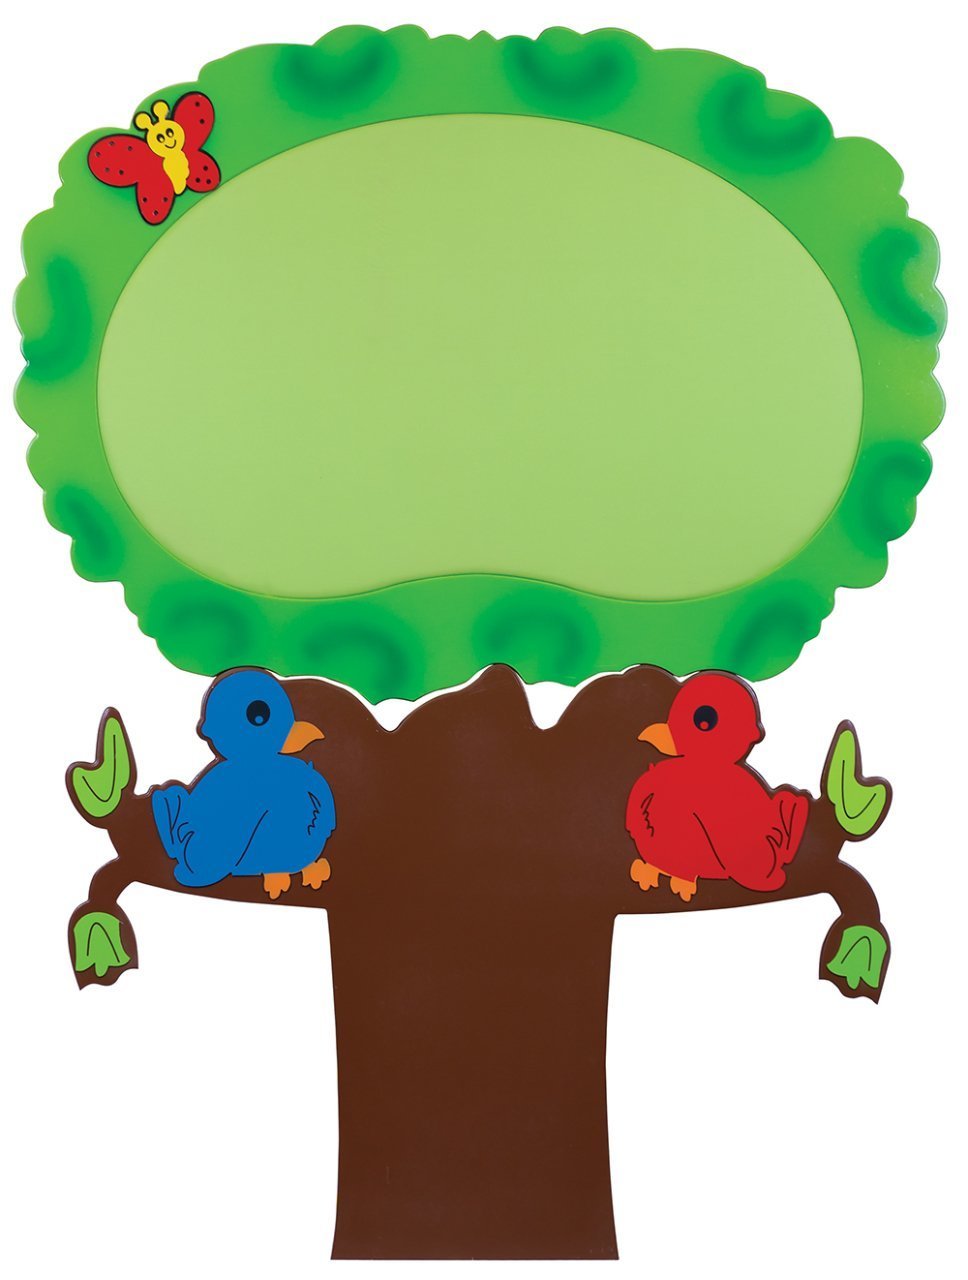 Ağaç Pano - Anaokulu Sınıf Mobilyası